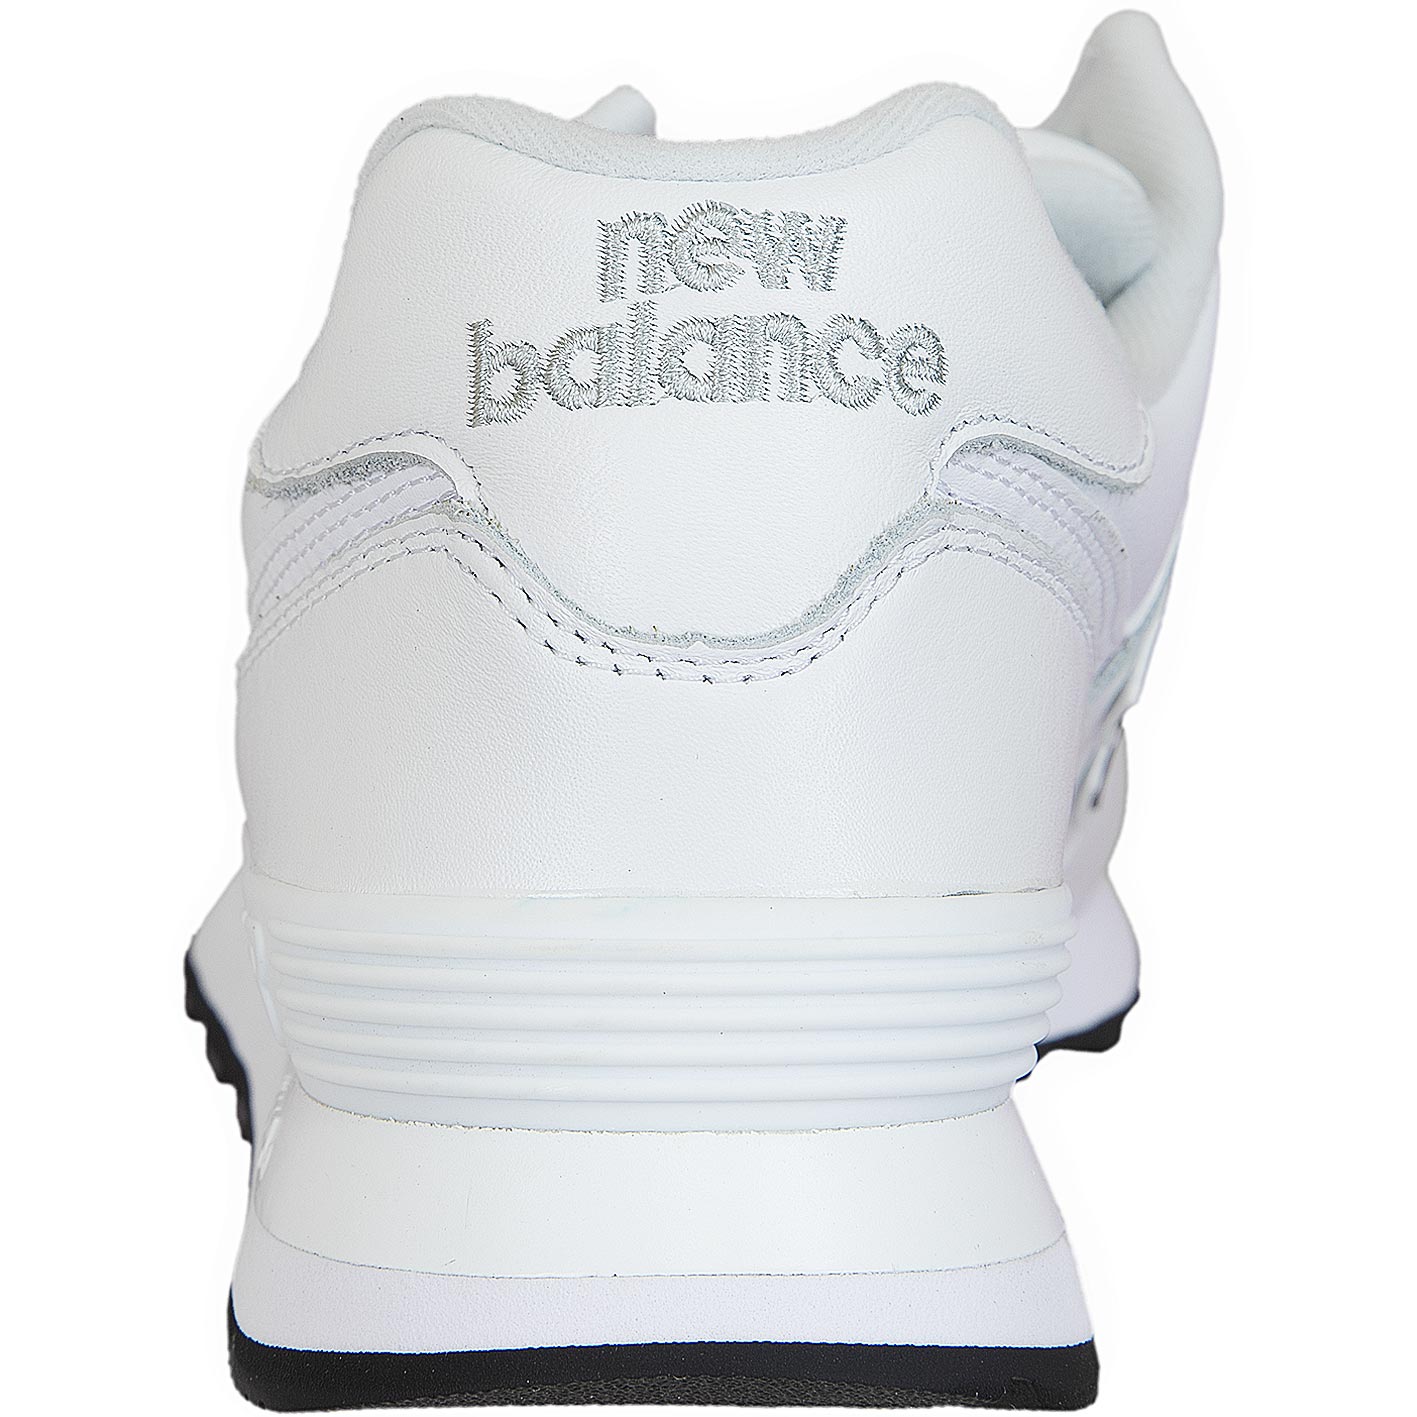 ☆ New Balance Sneaker 574 Leder/Synthetik weiß/grau - hier bestellen!